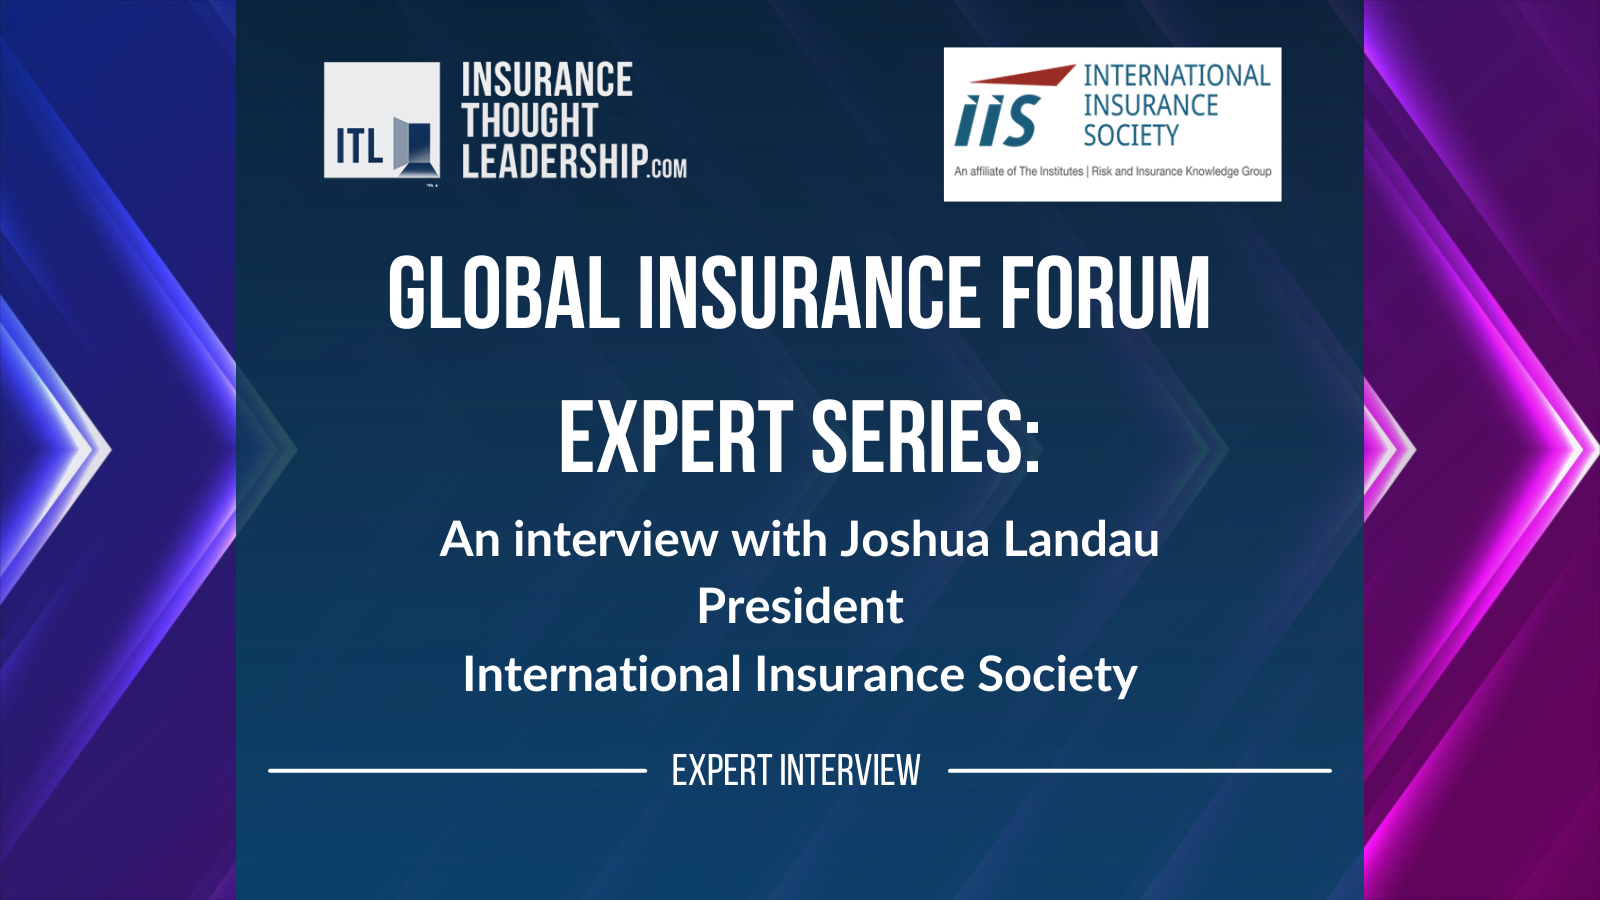 Global Insurance Forum Experts Series: An Interview with Joshua Landau